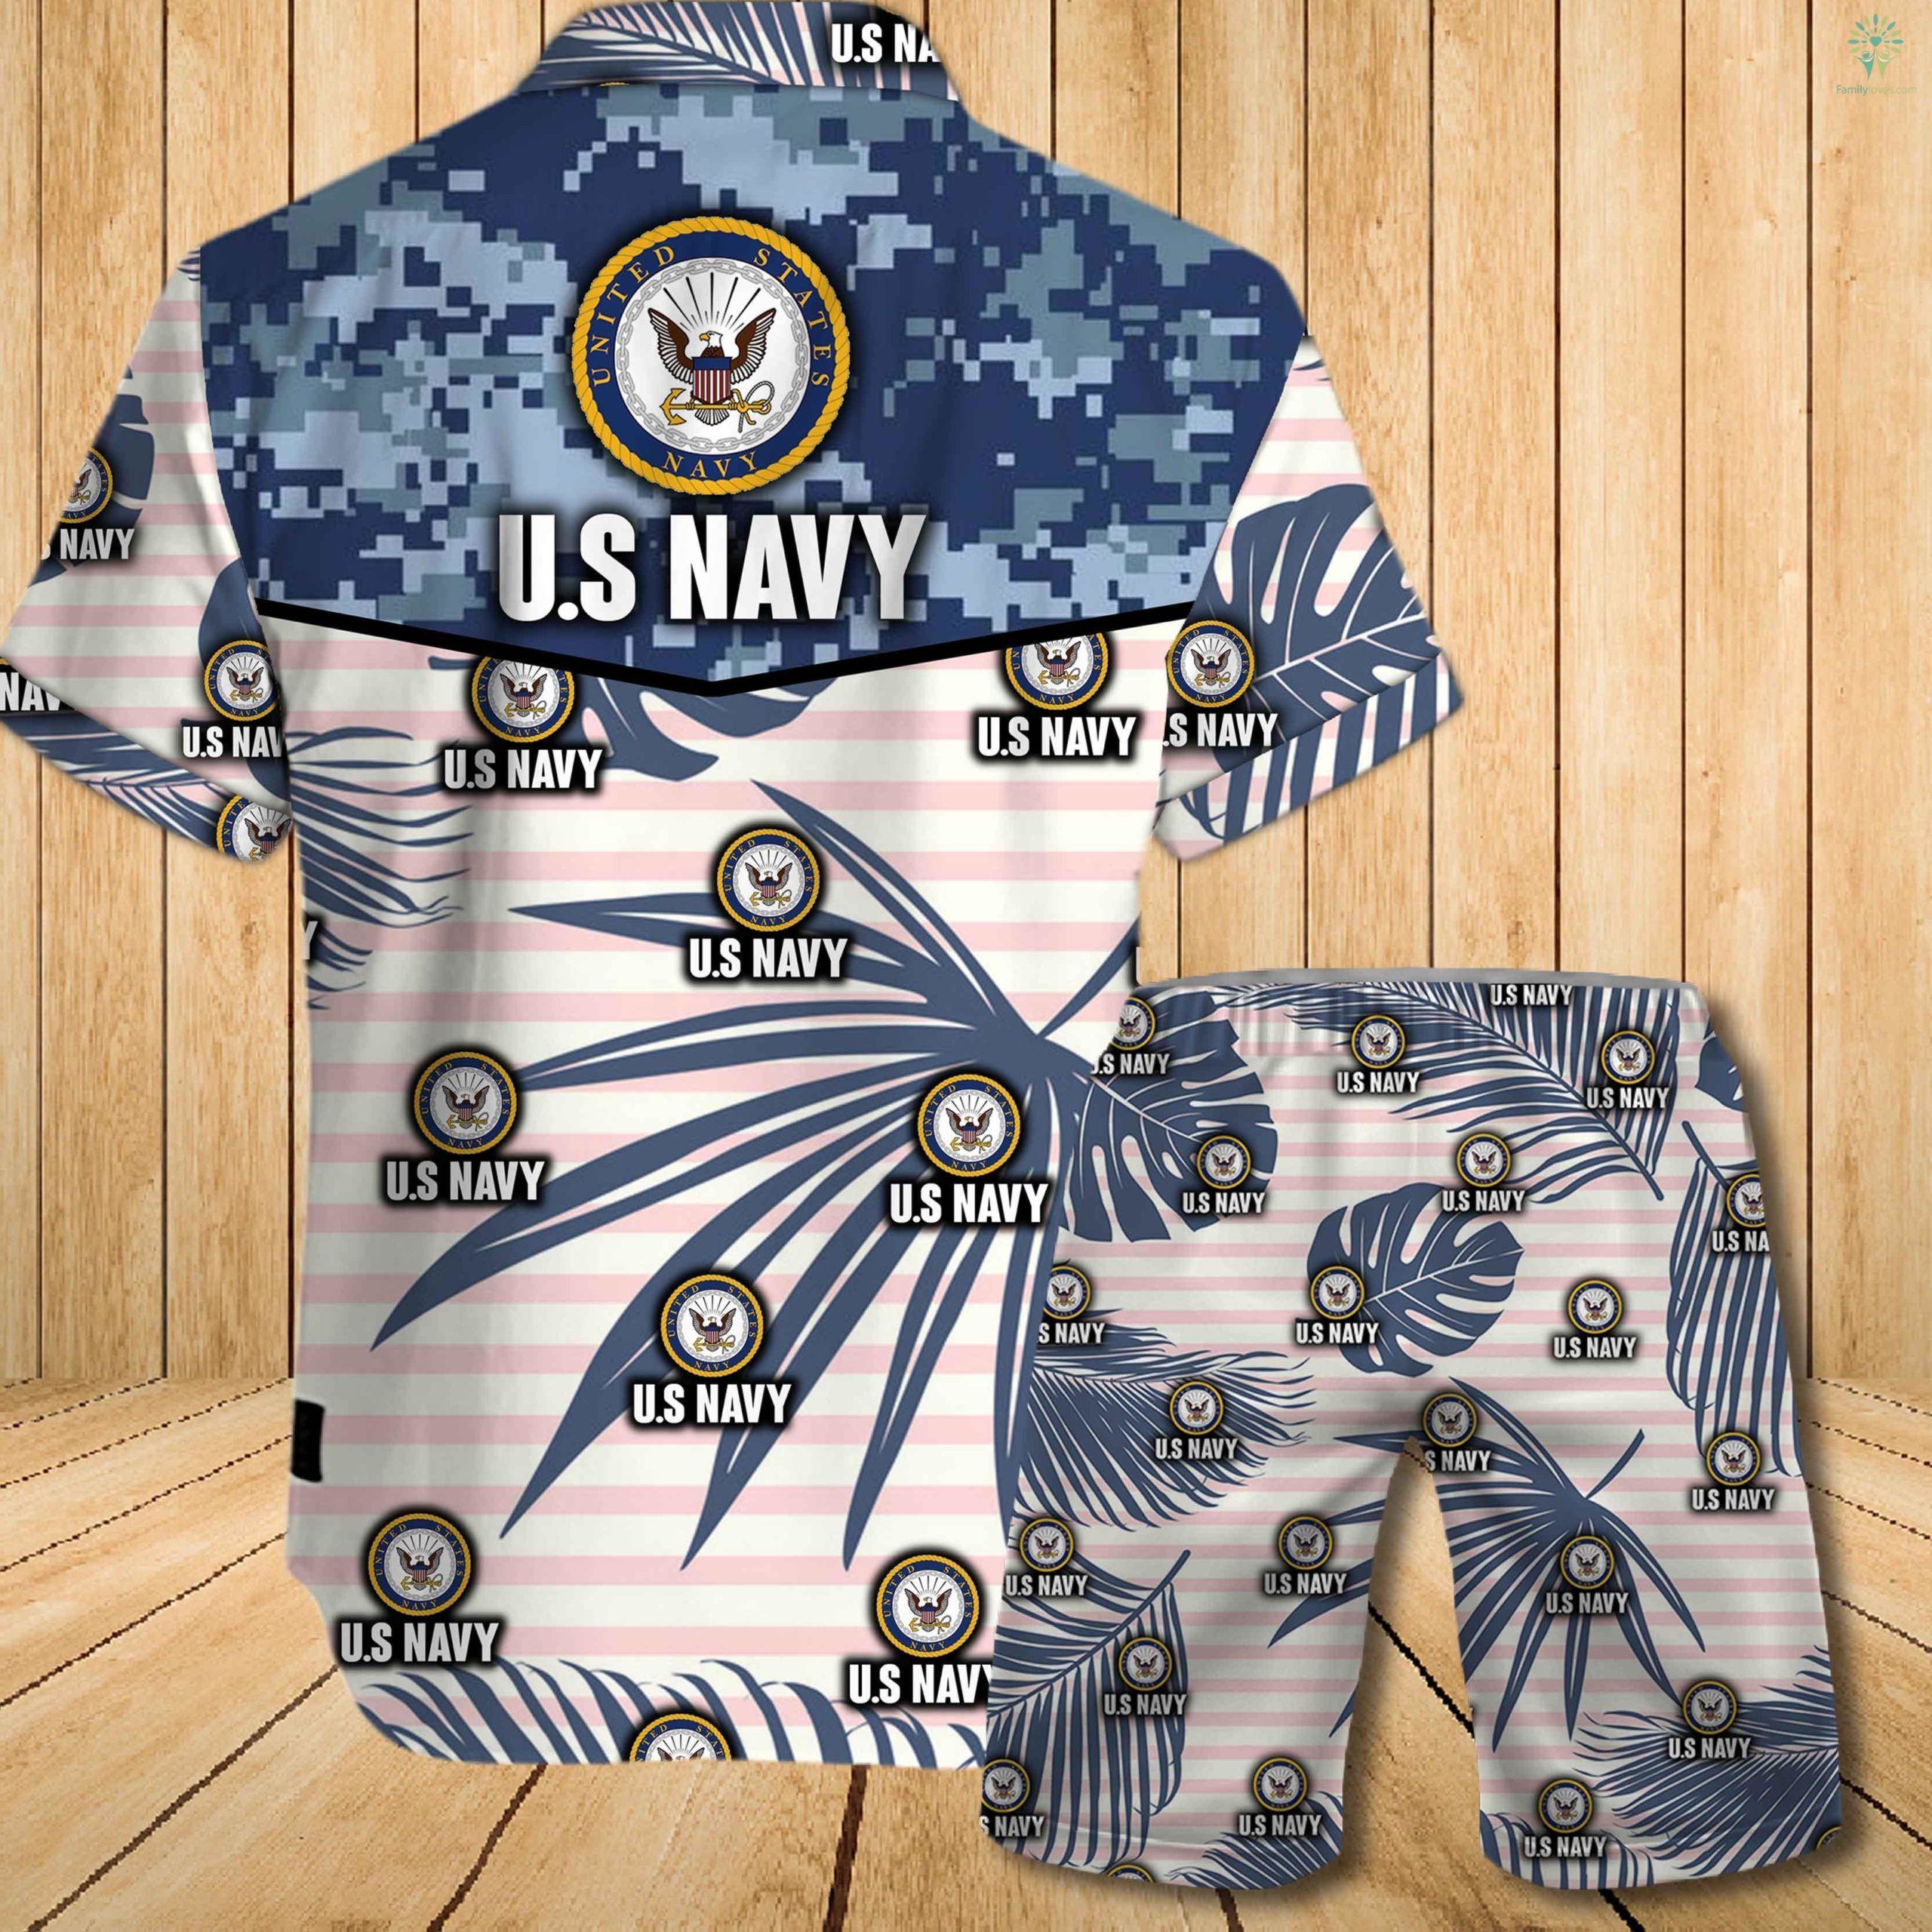 US navy hawaiian shirt and shorts – Hothot 170620